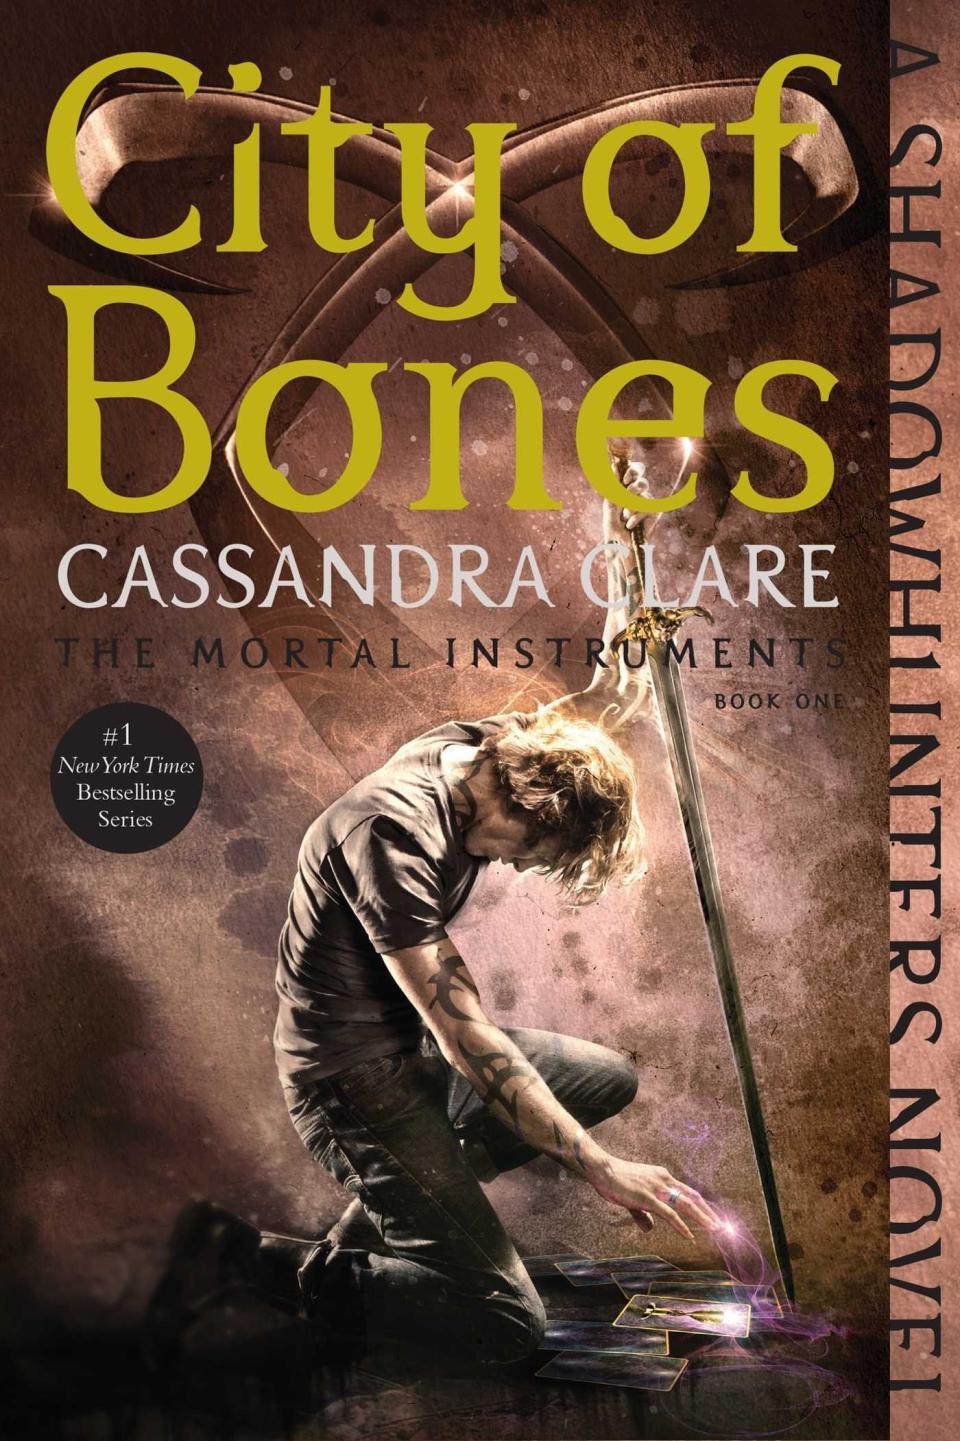 8) "City of Bones" by Cassandra Clare